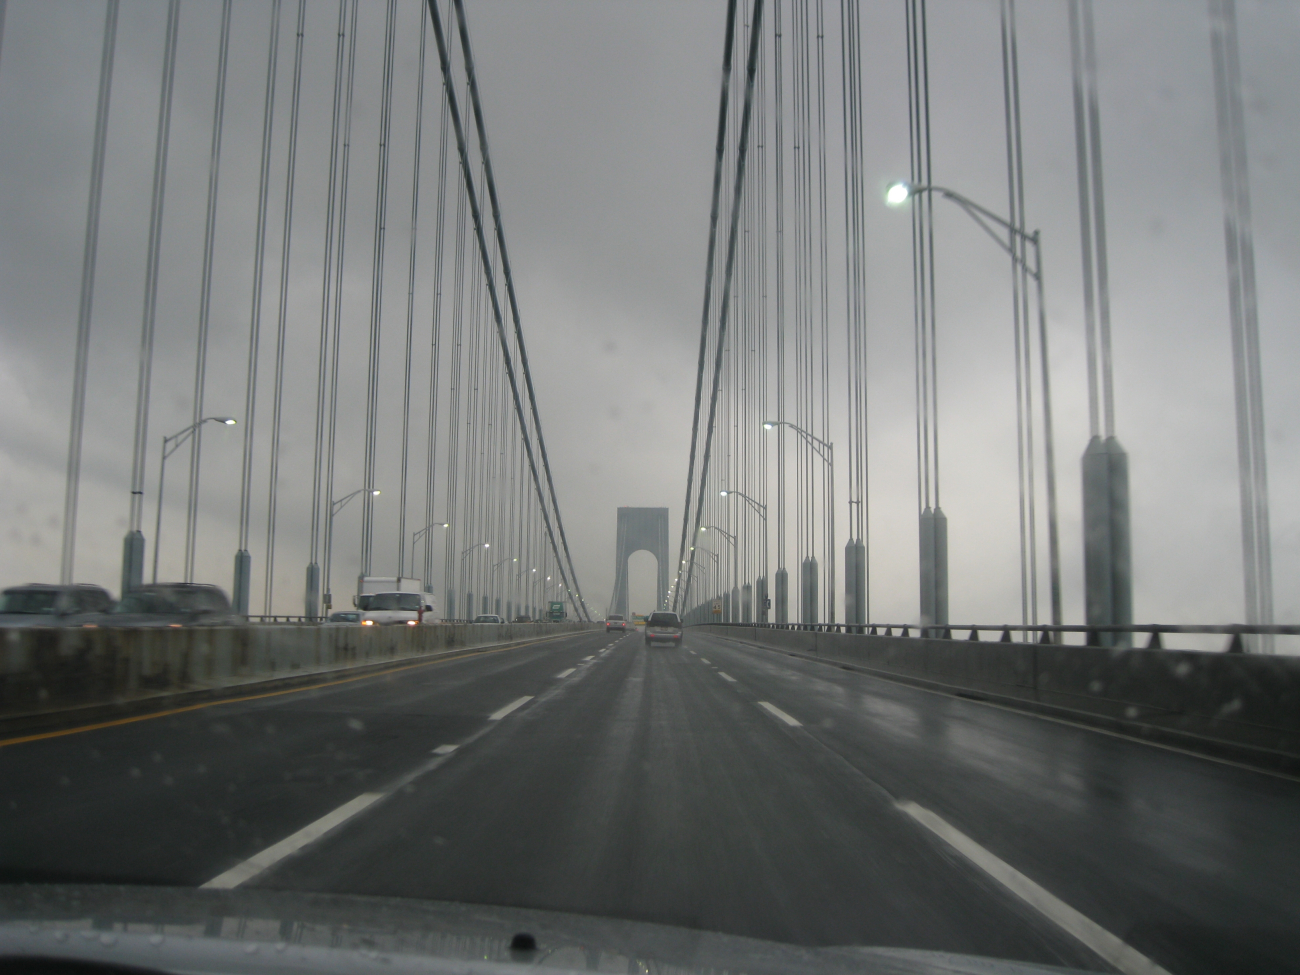 Crossing over Verrazano Narrows Bridge from Staten Island to Long Island